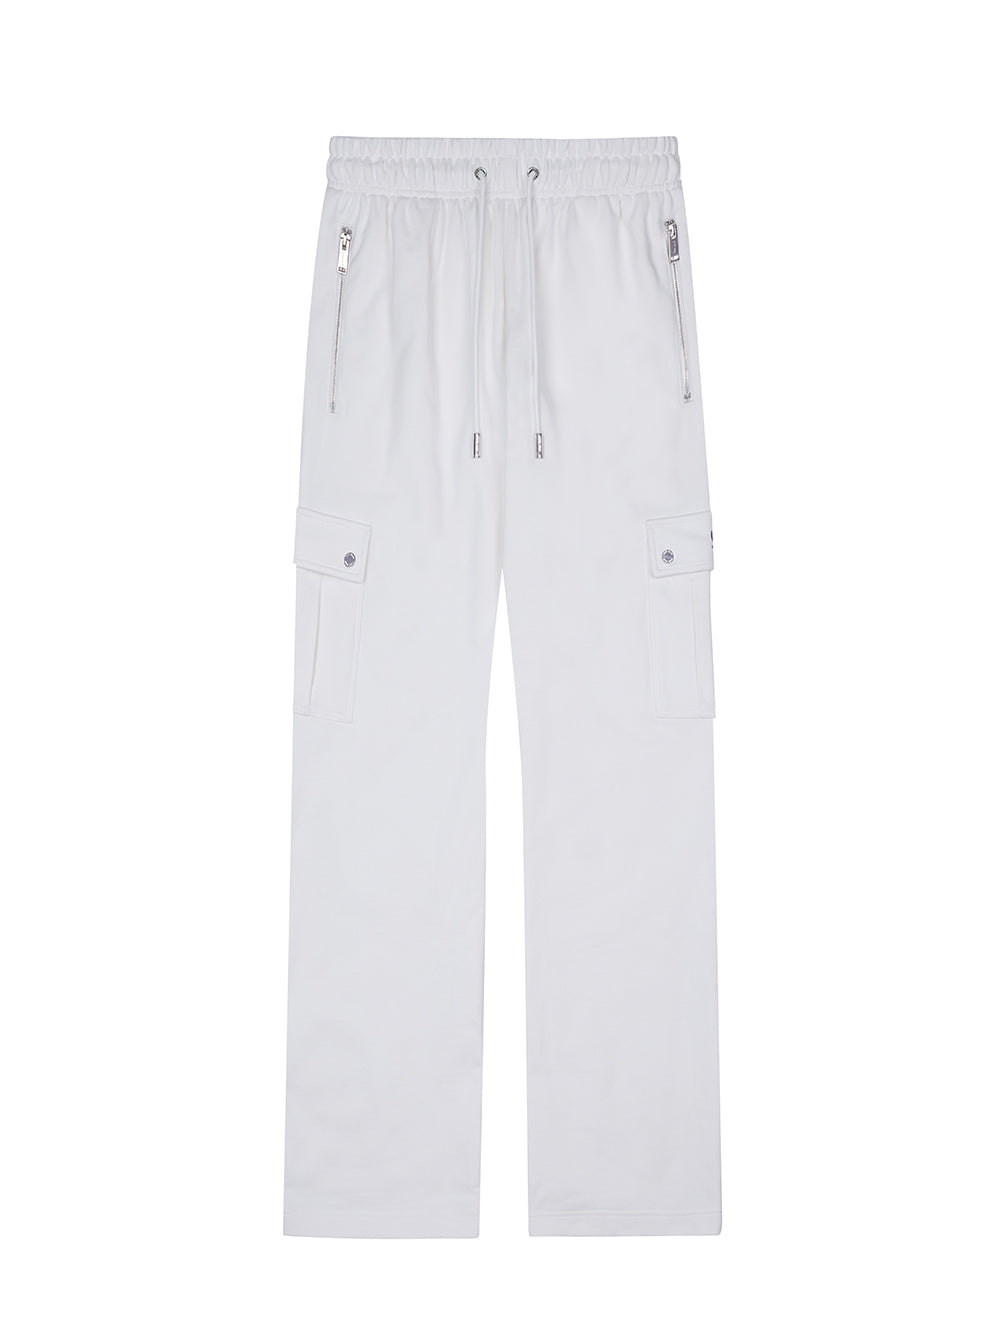 TEAM WANG design x CHUANG ASIA Casual Cargo Pants (White)